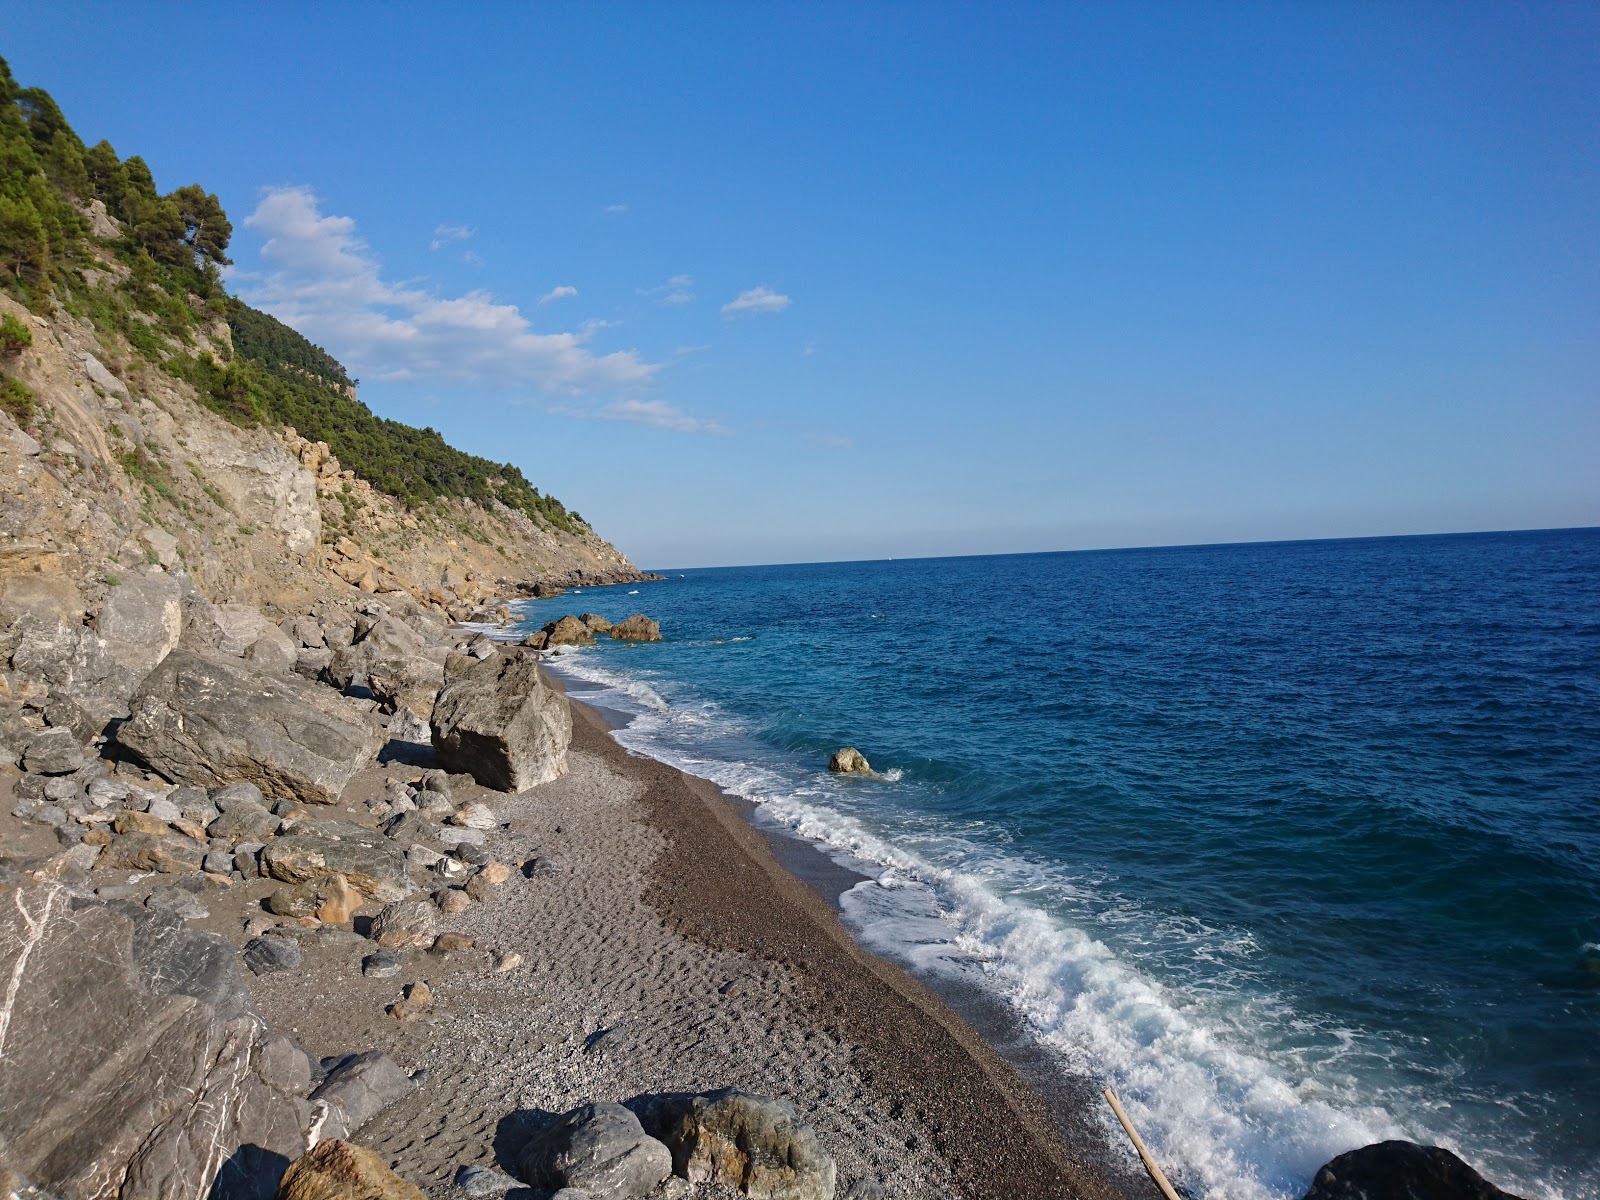 Photo of Spiaggia La Marossa with gray pebble surface